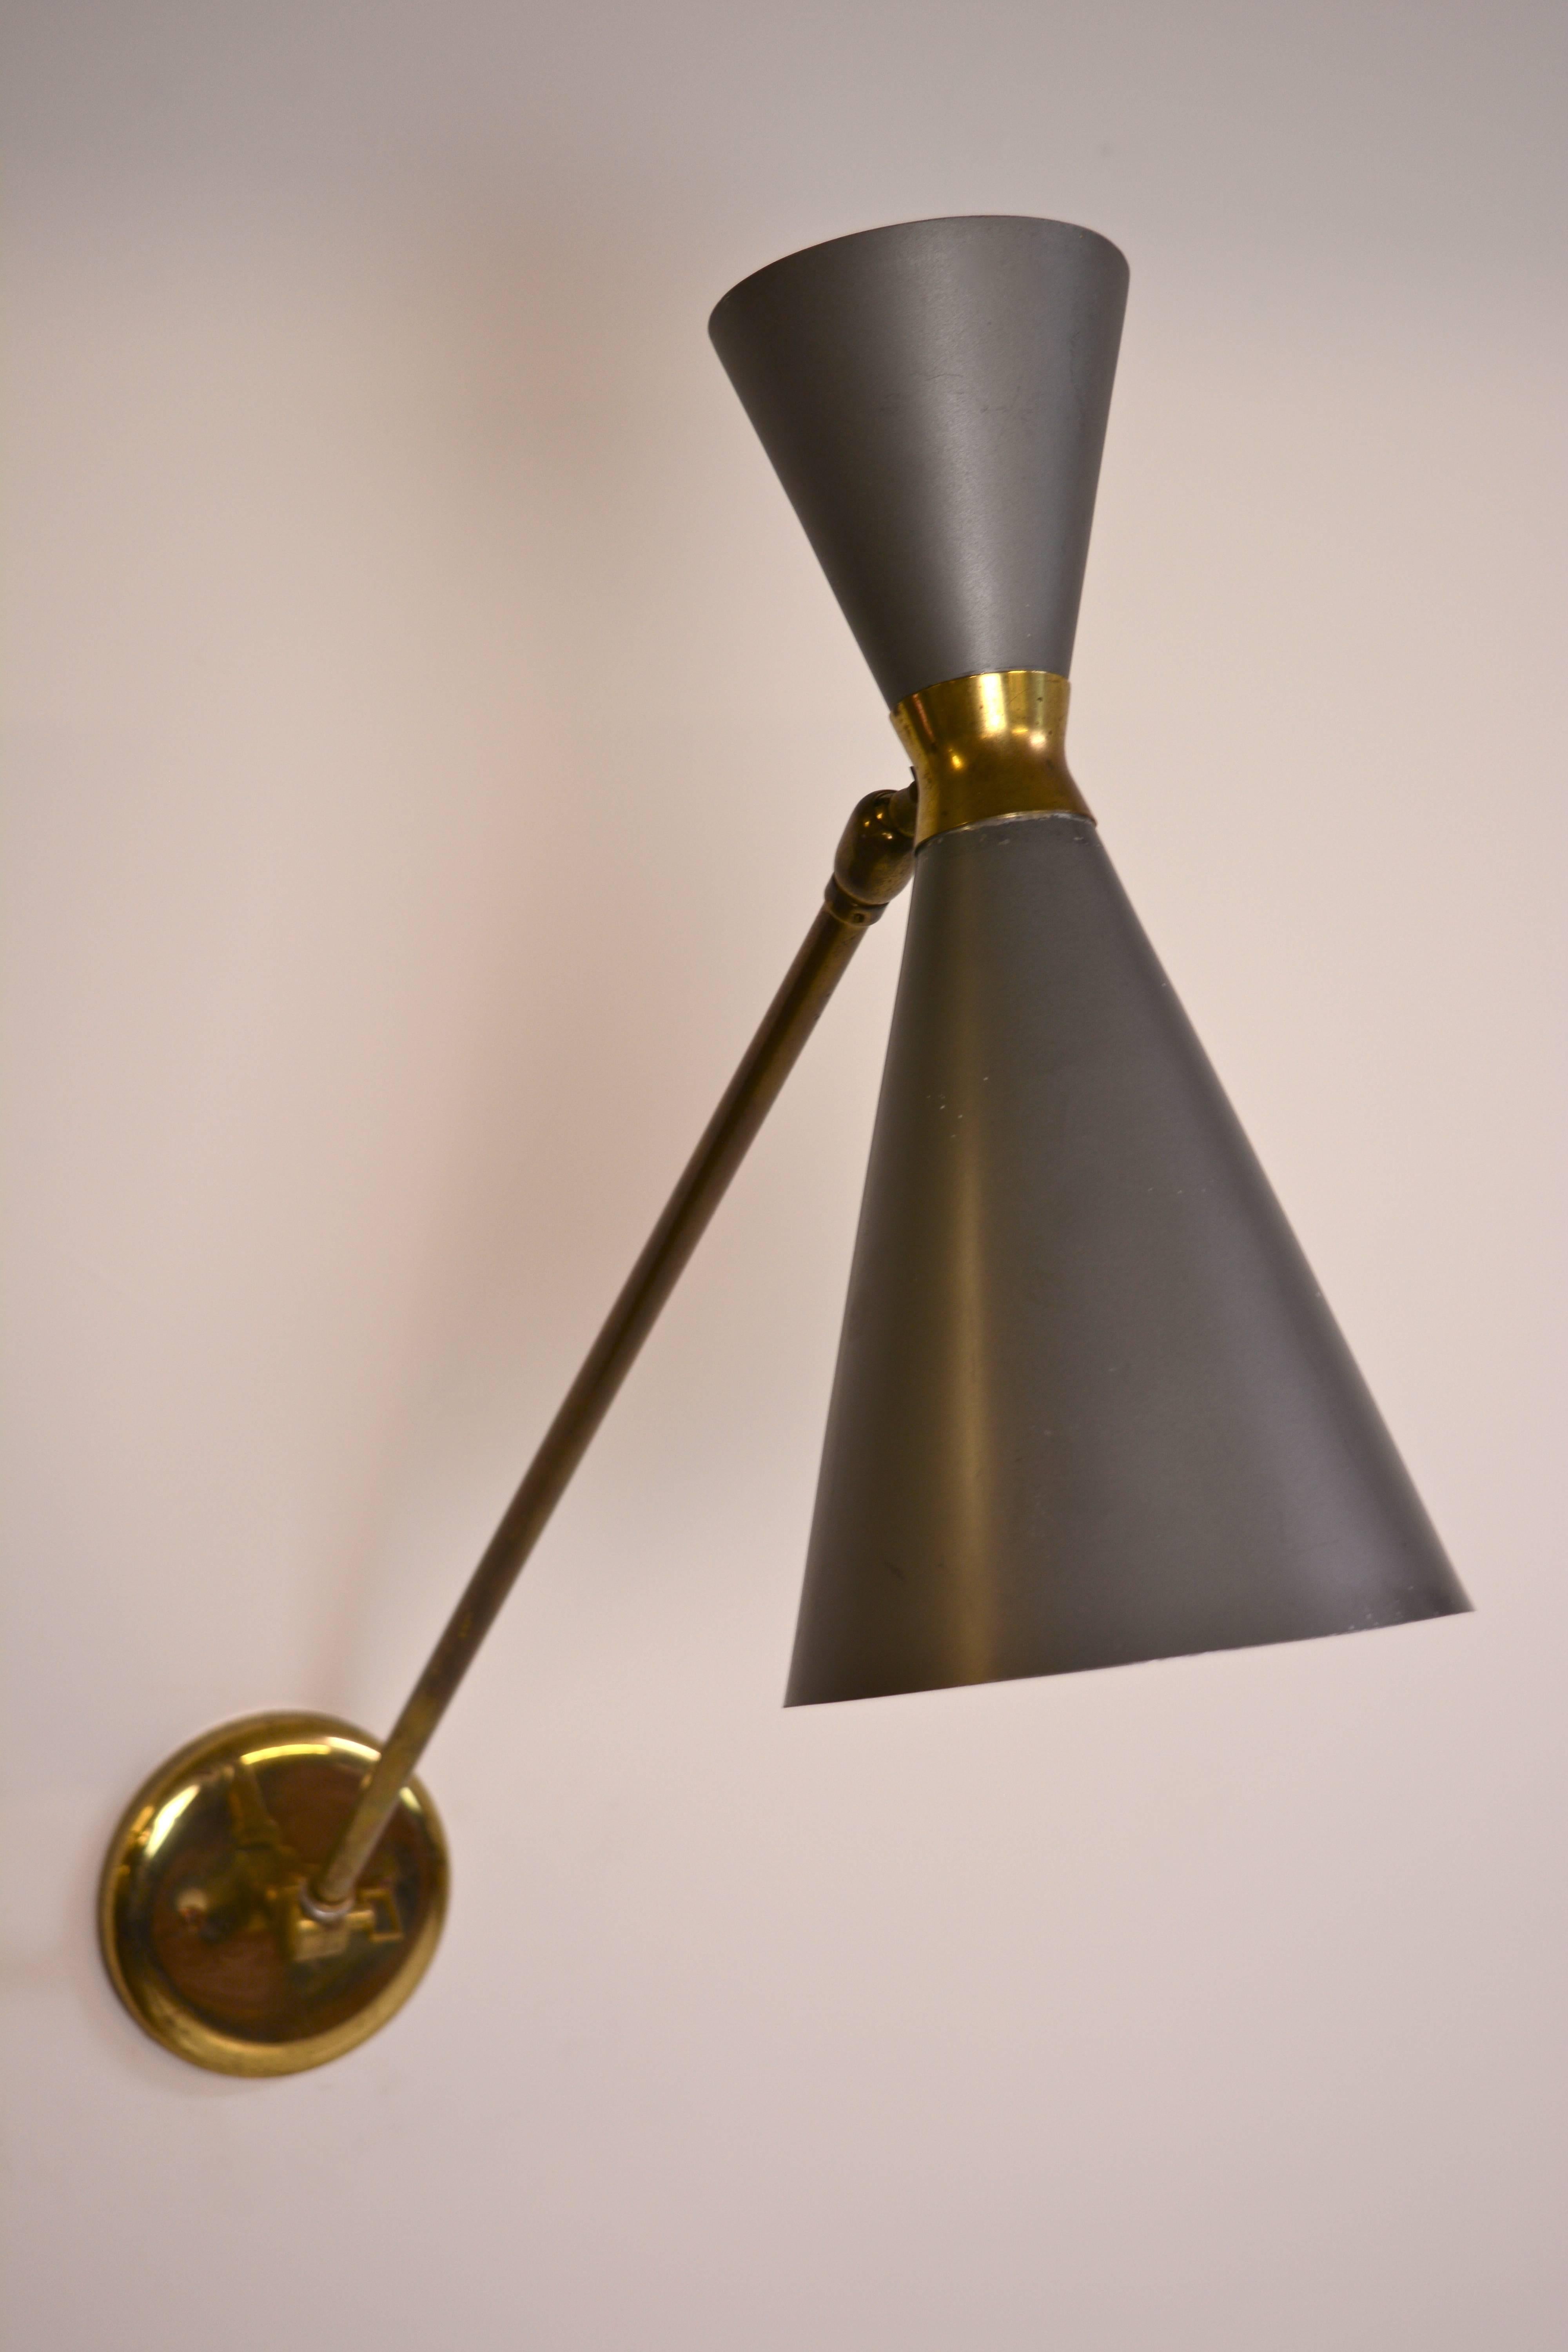 gino sarfatti wall lamp